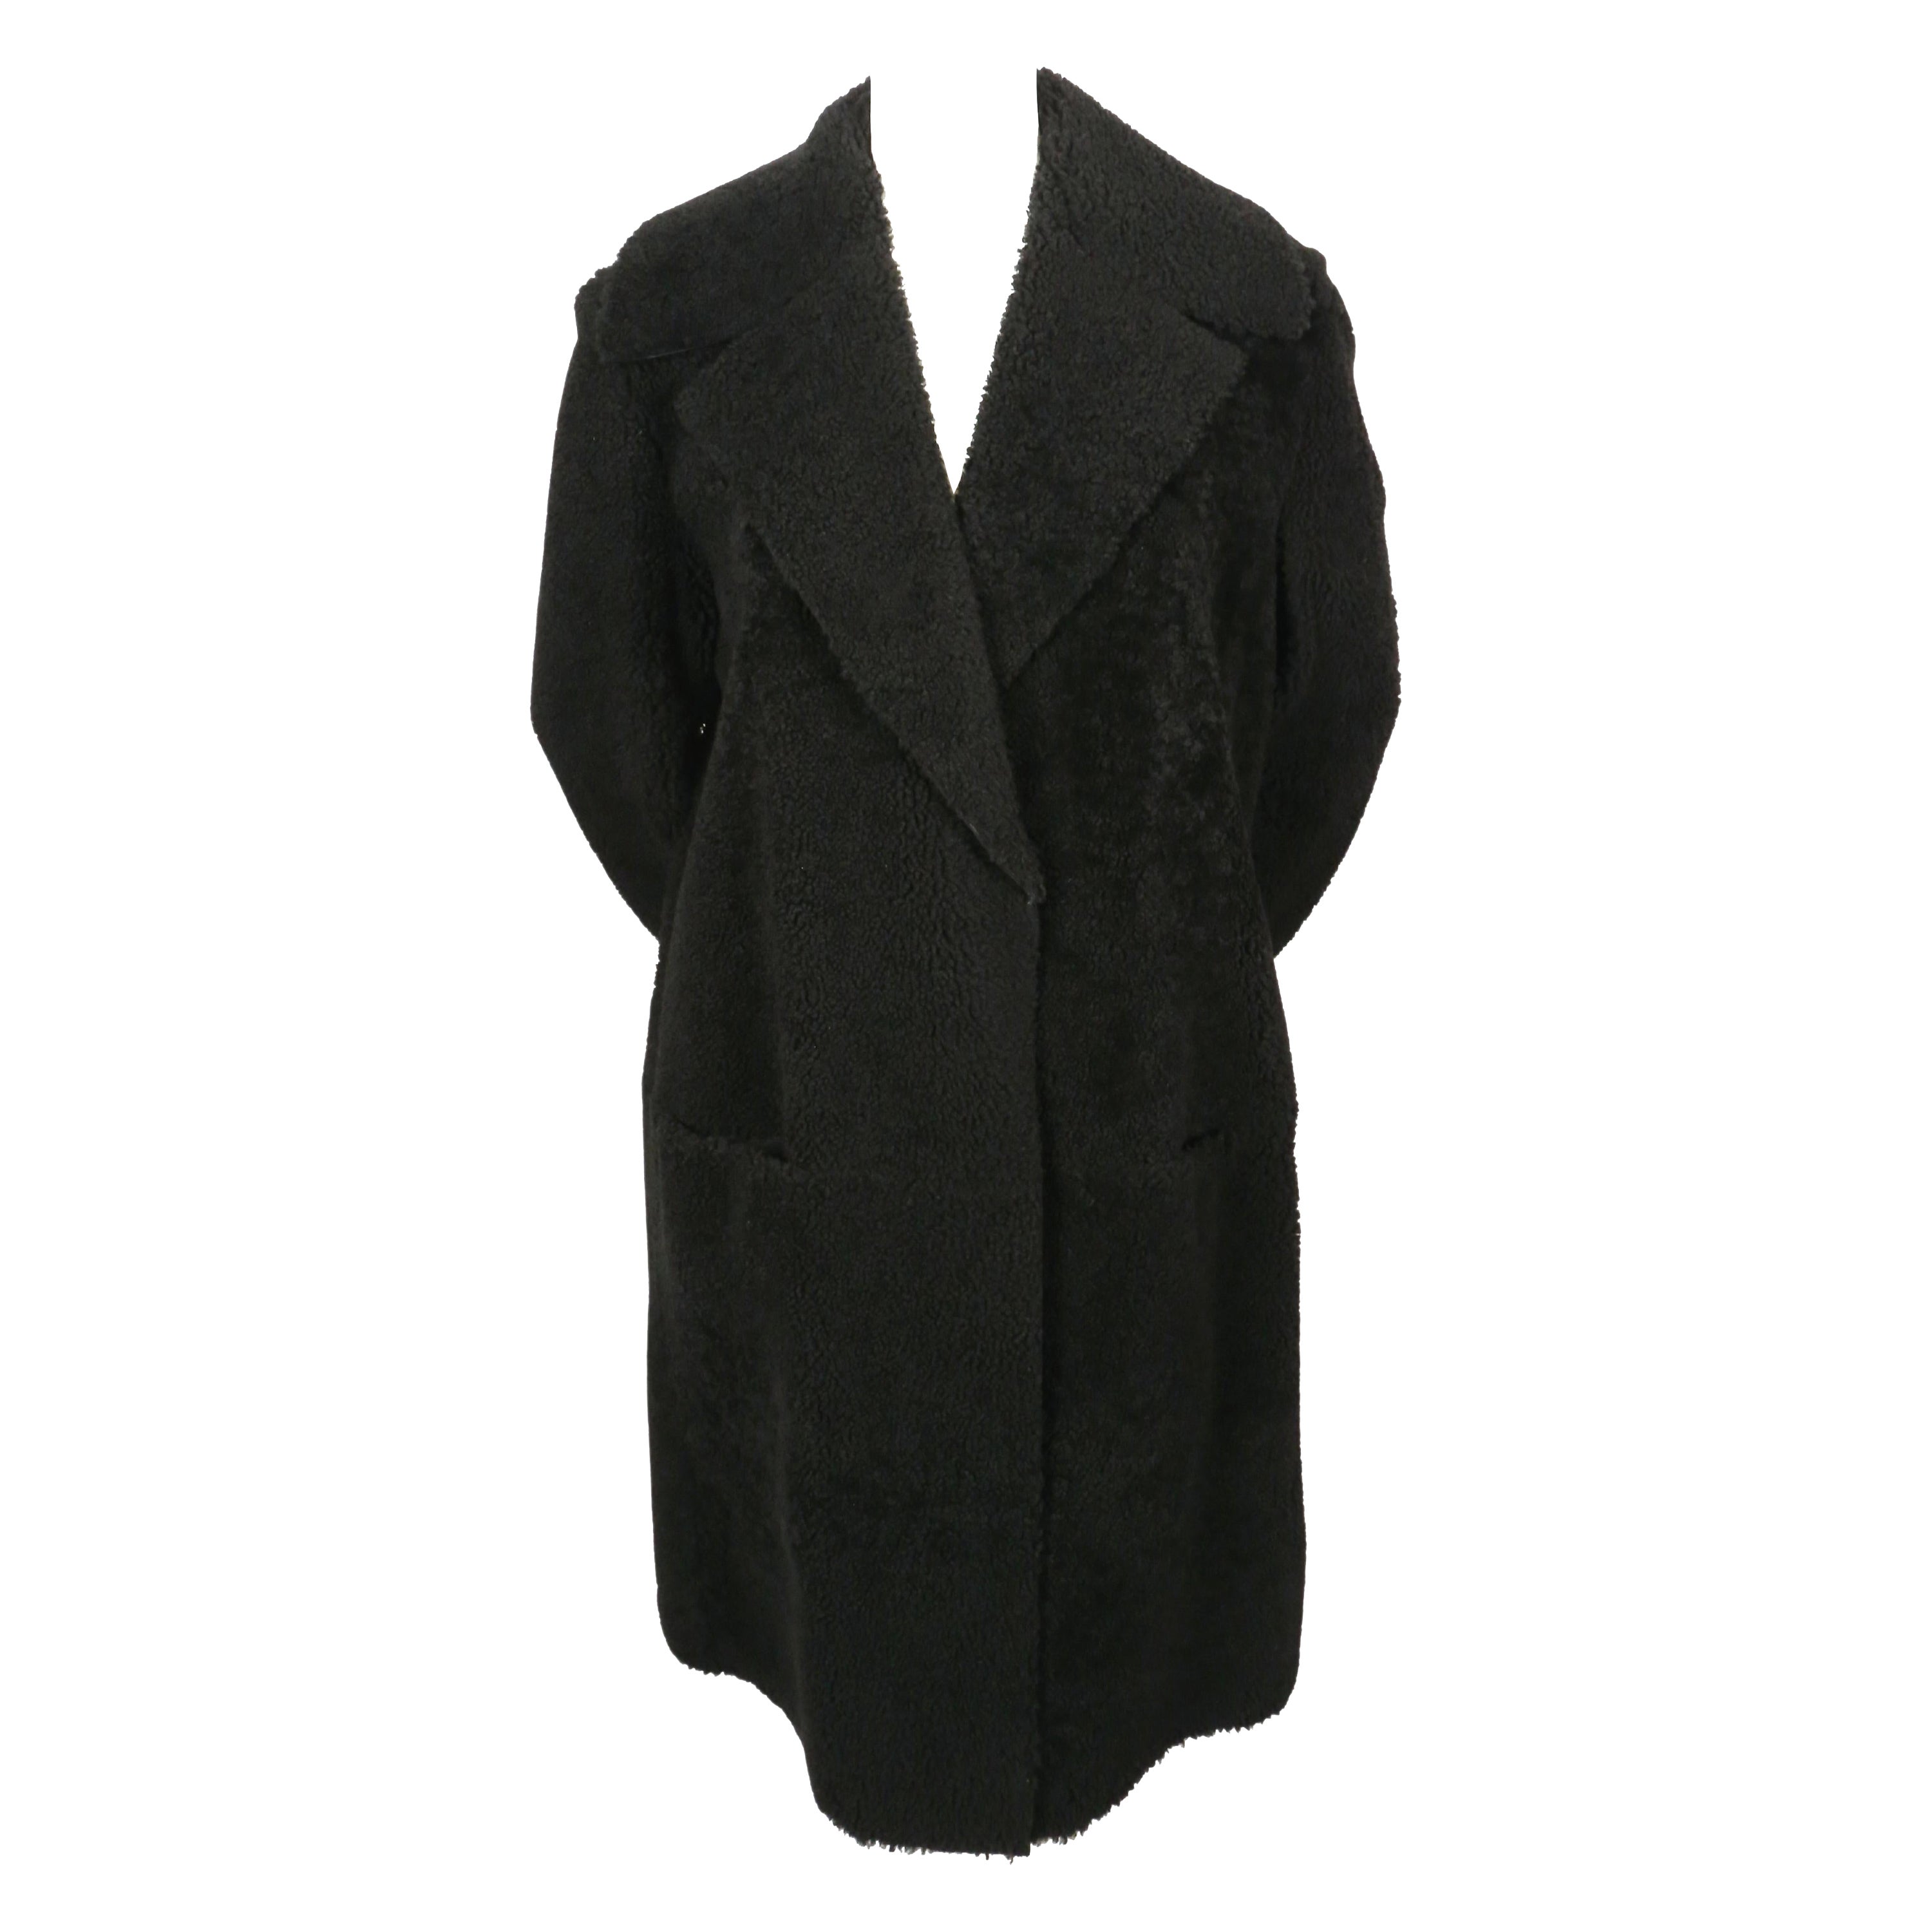 CELINE by PHOEBE PHILO black shearling coat For Sale